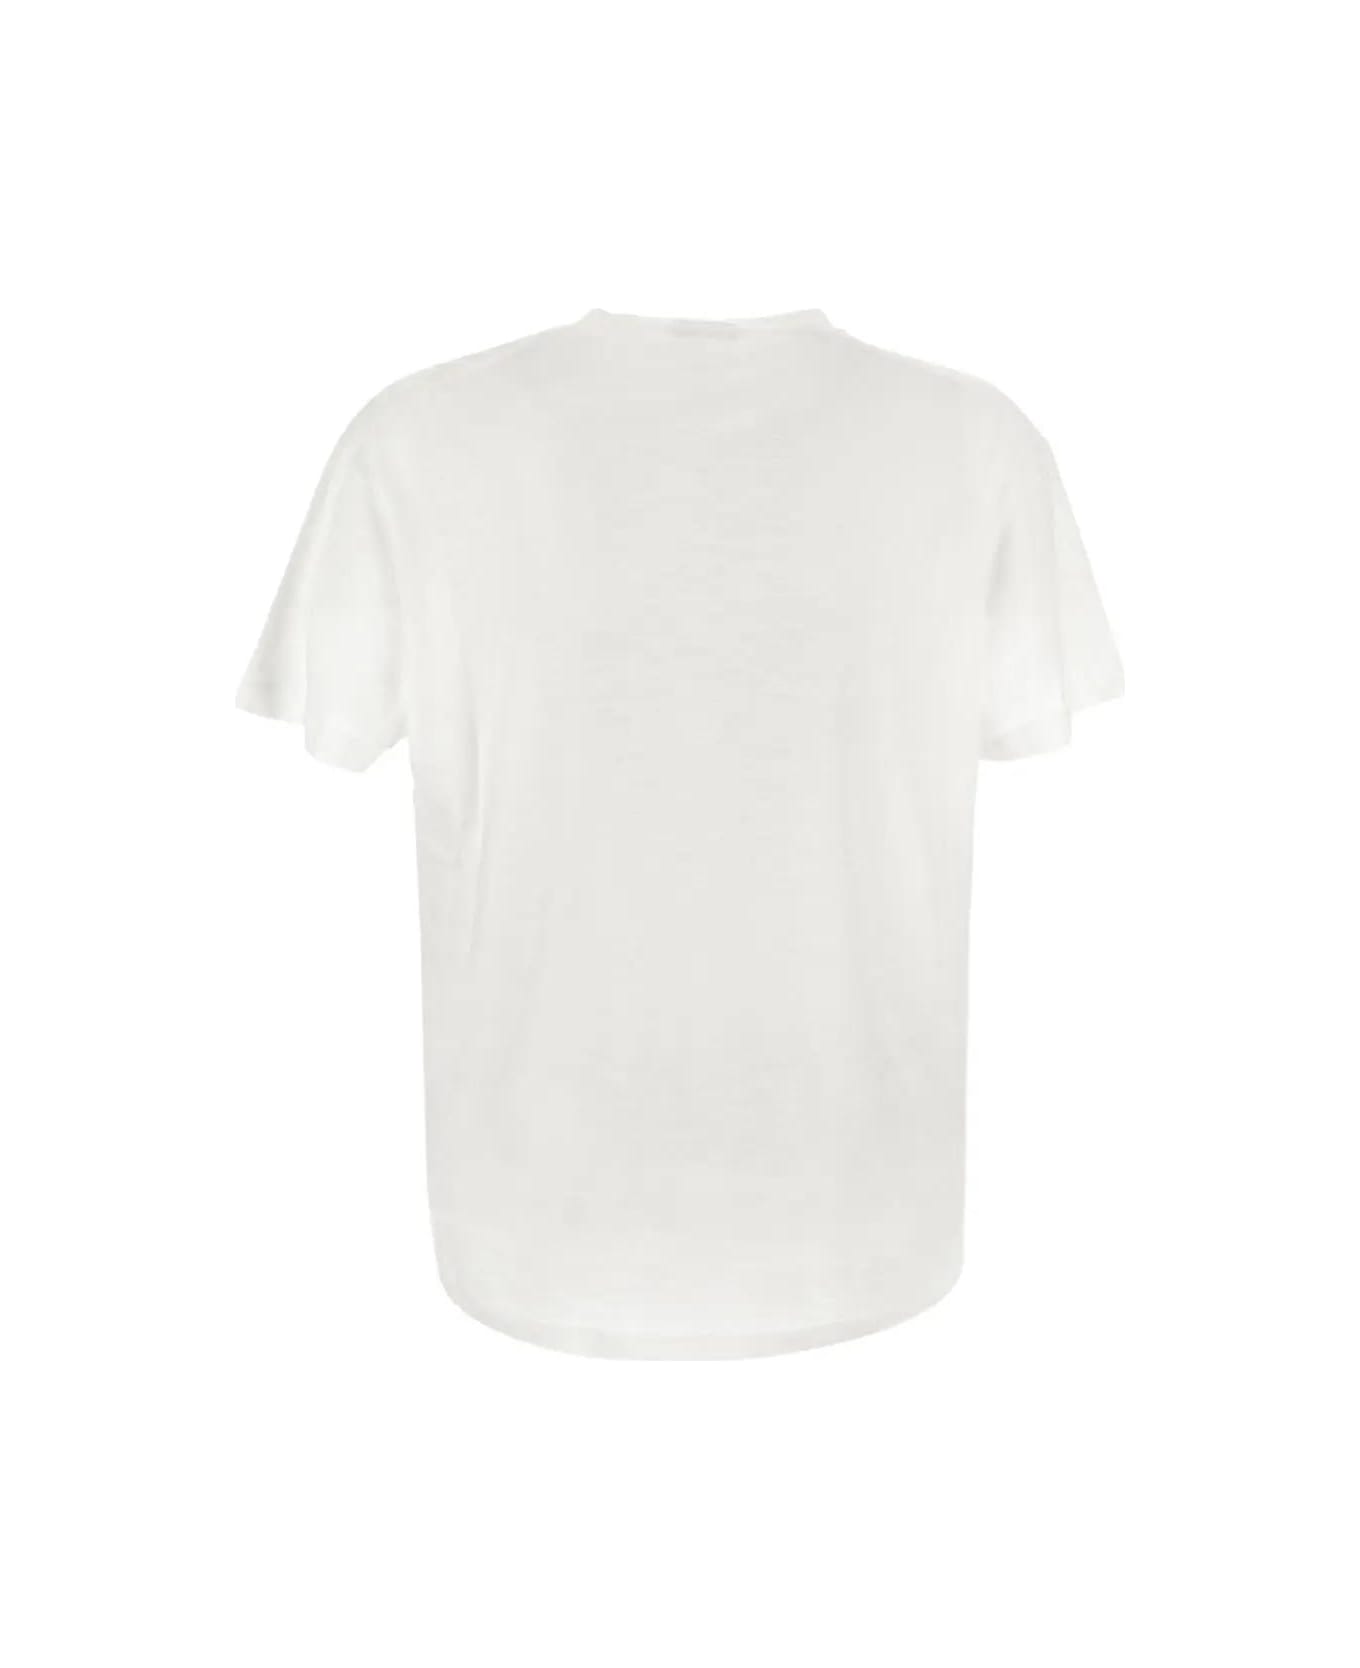 Tom Ford Classic T-shirt - White